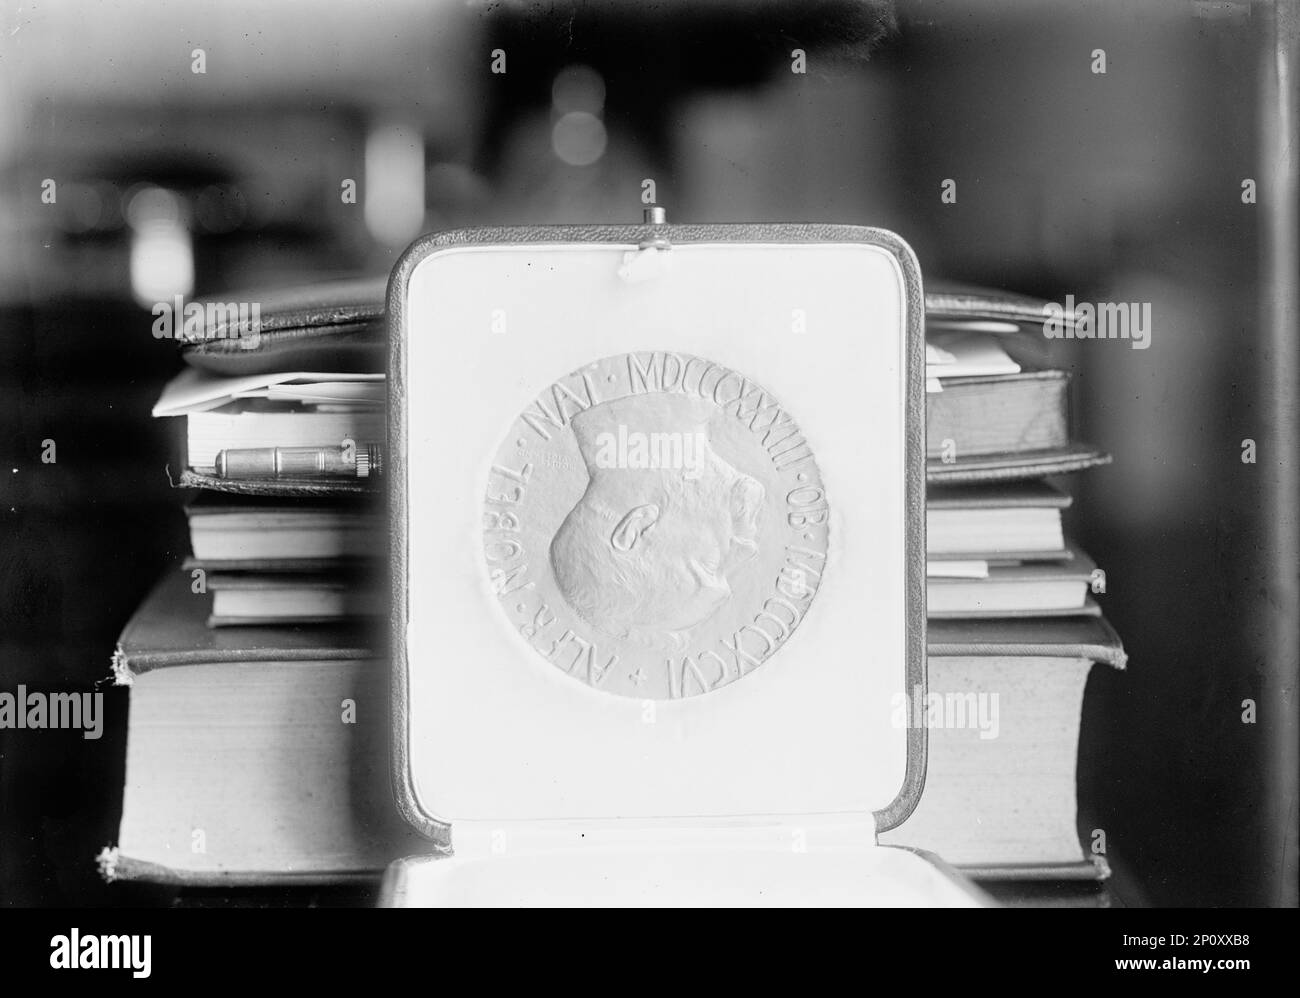 Nobel Peace Prize - The Medal, 1913. Latin inscription: 'ALFR NOBEL NAT MDCCCXXXIII - OB MDCCCXCVI' - Alfred Nobel - born 1833 - died 1896. Stock Photo